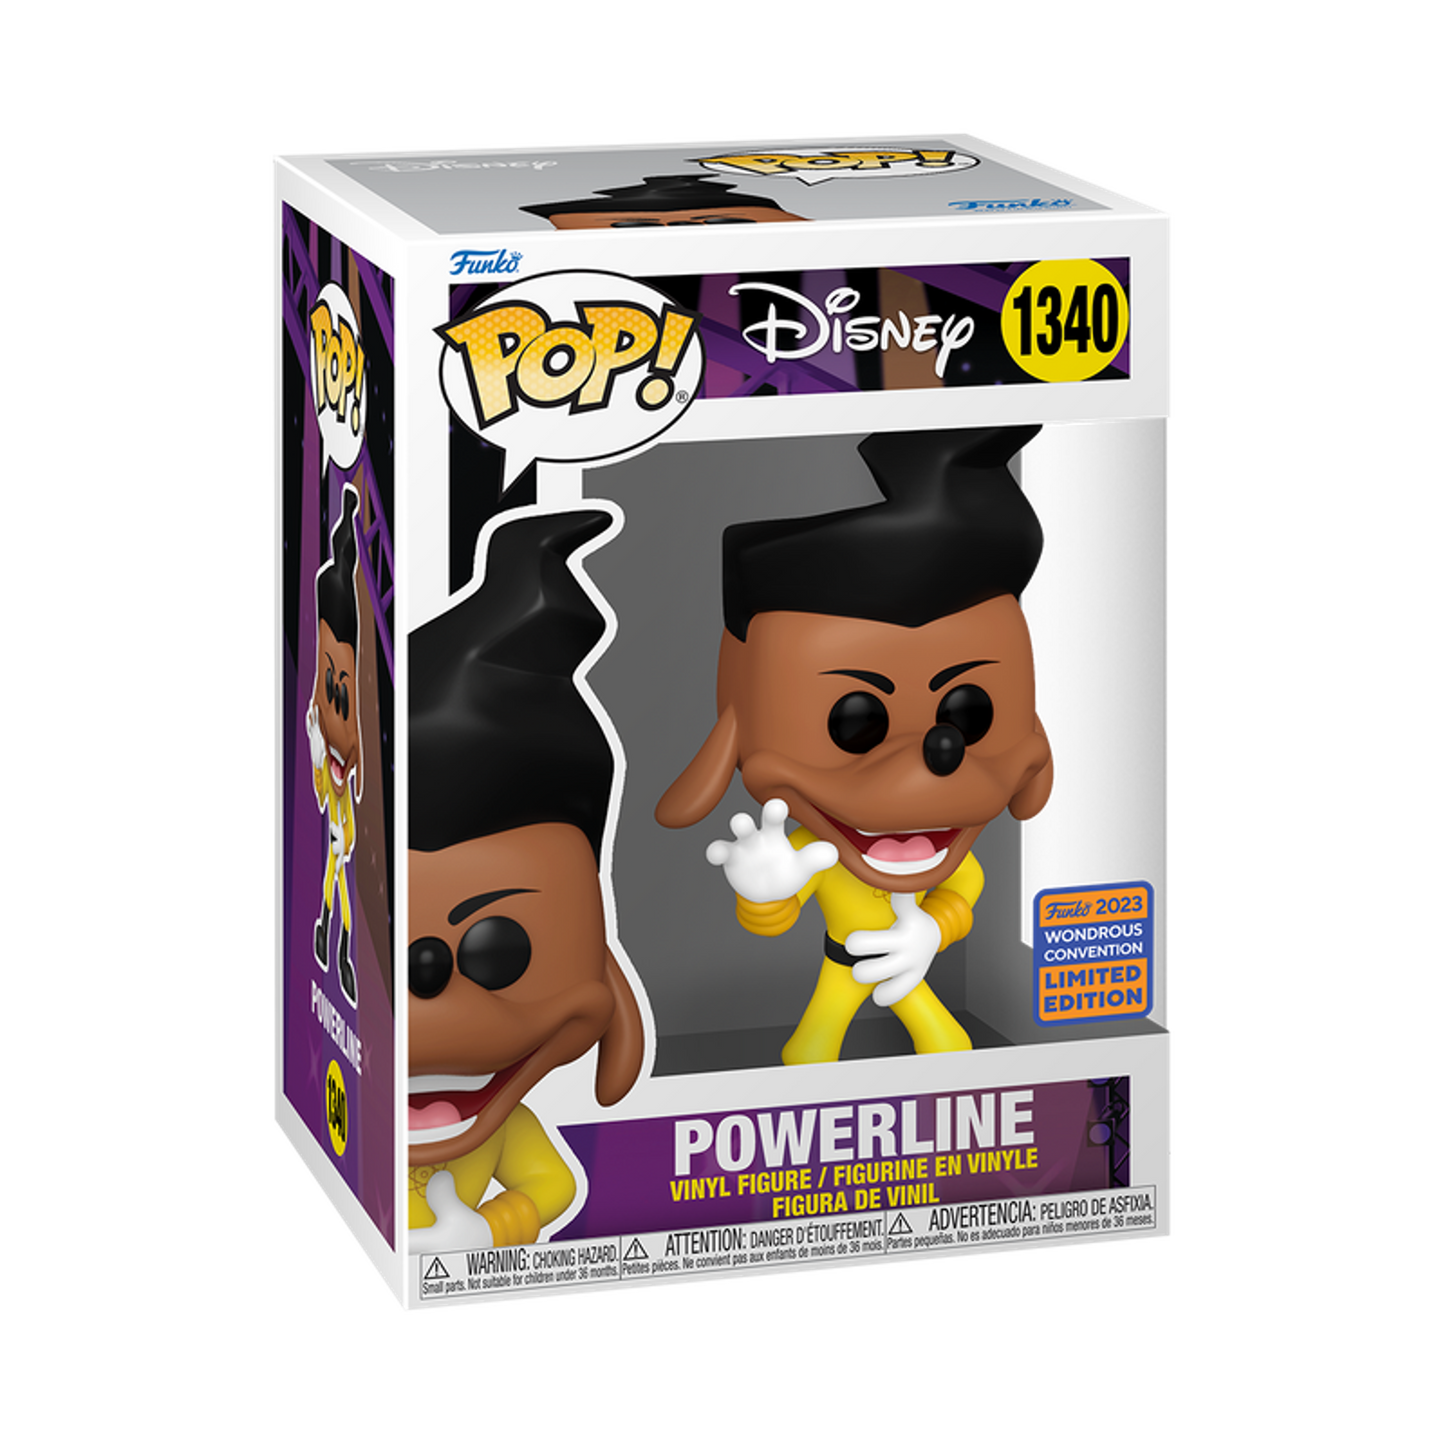 Disney Powerline Funko Pop! (DAMAGED BOX)